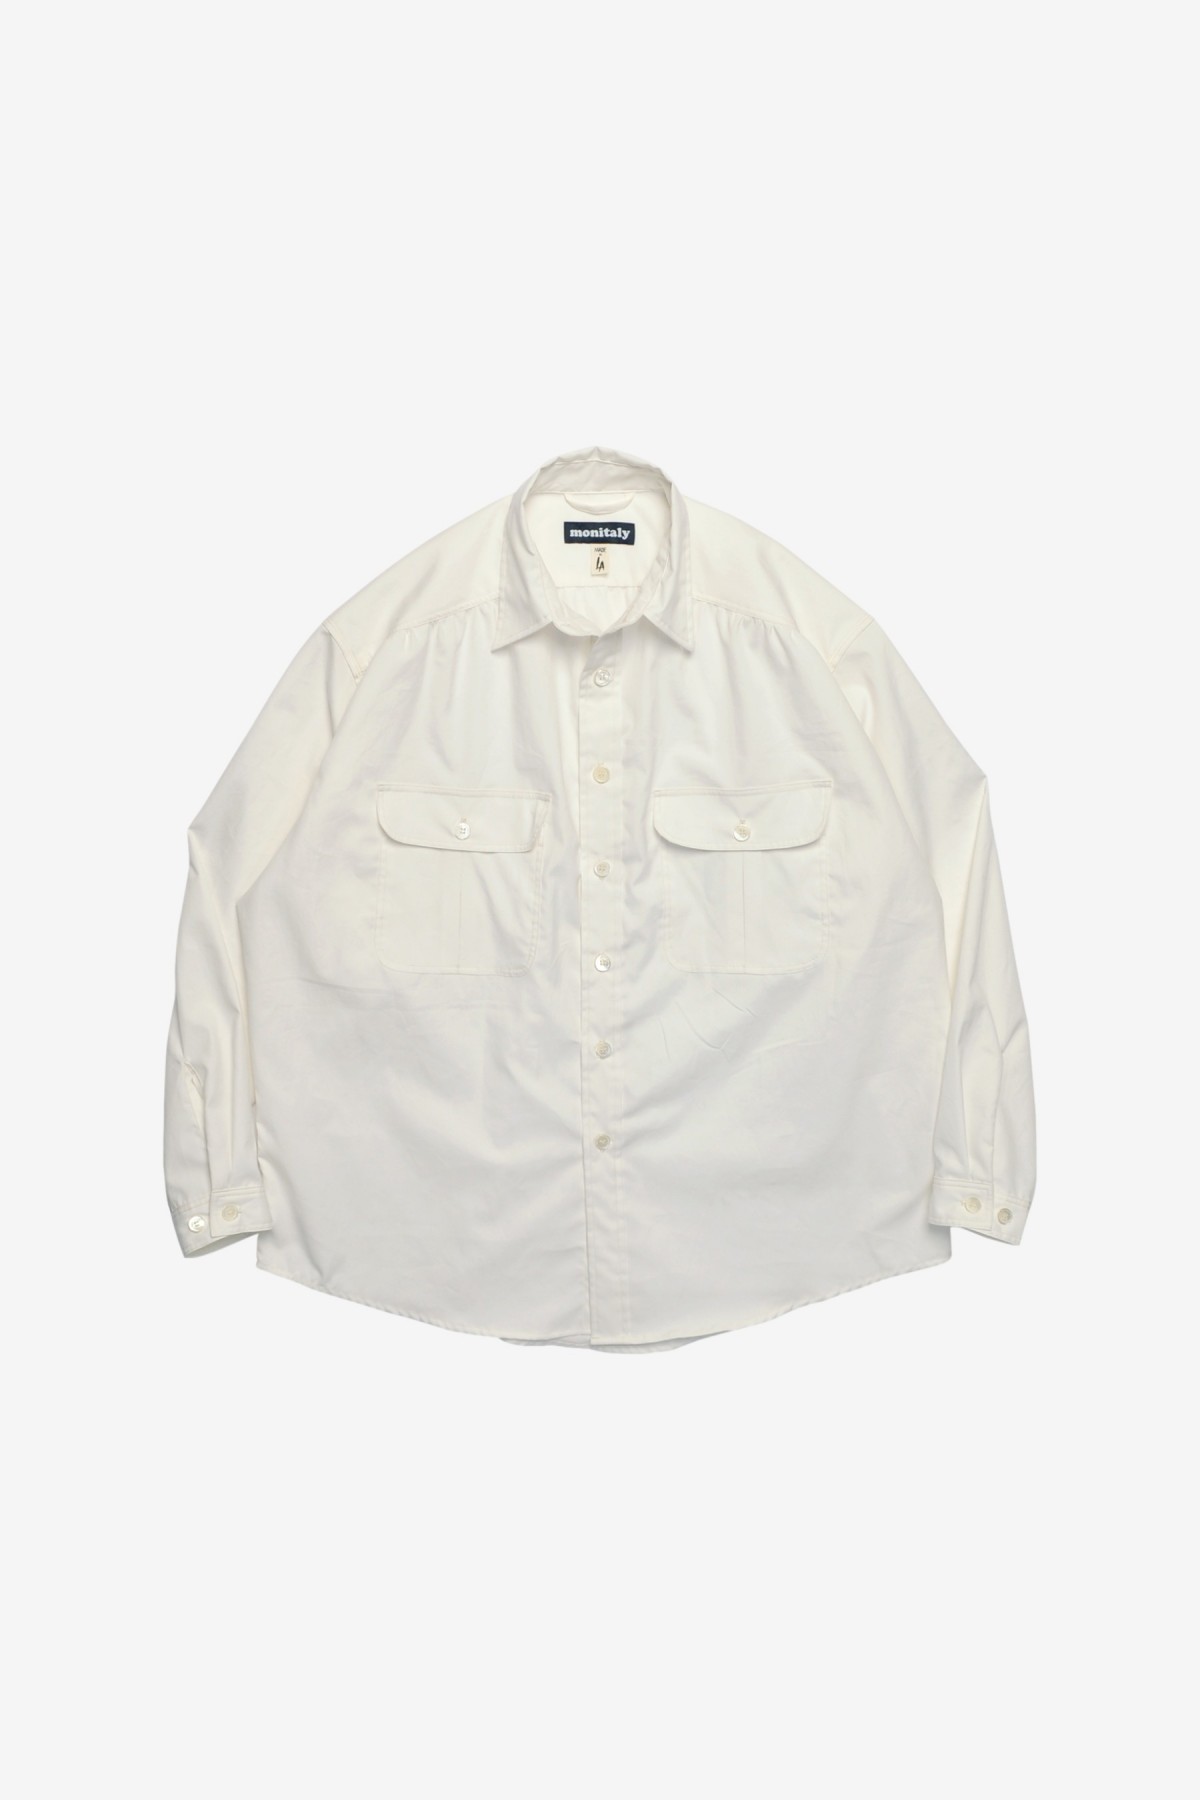 Monitaly Giorgio Work Shirt in Vancloth Oxford White